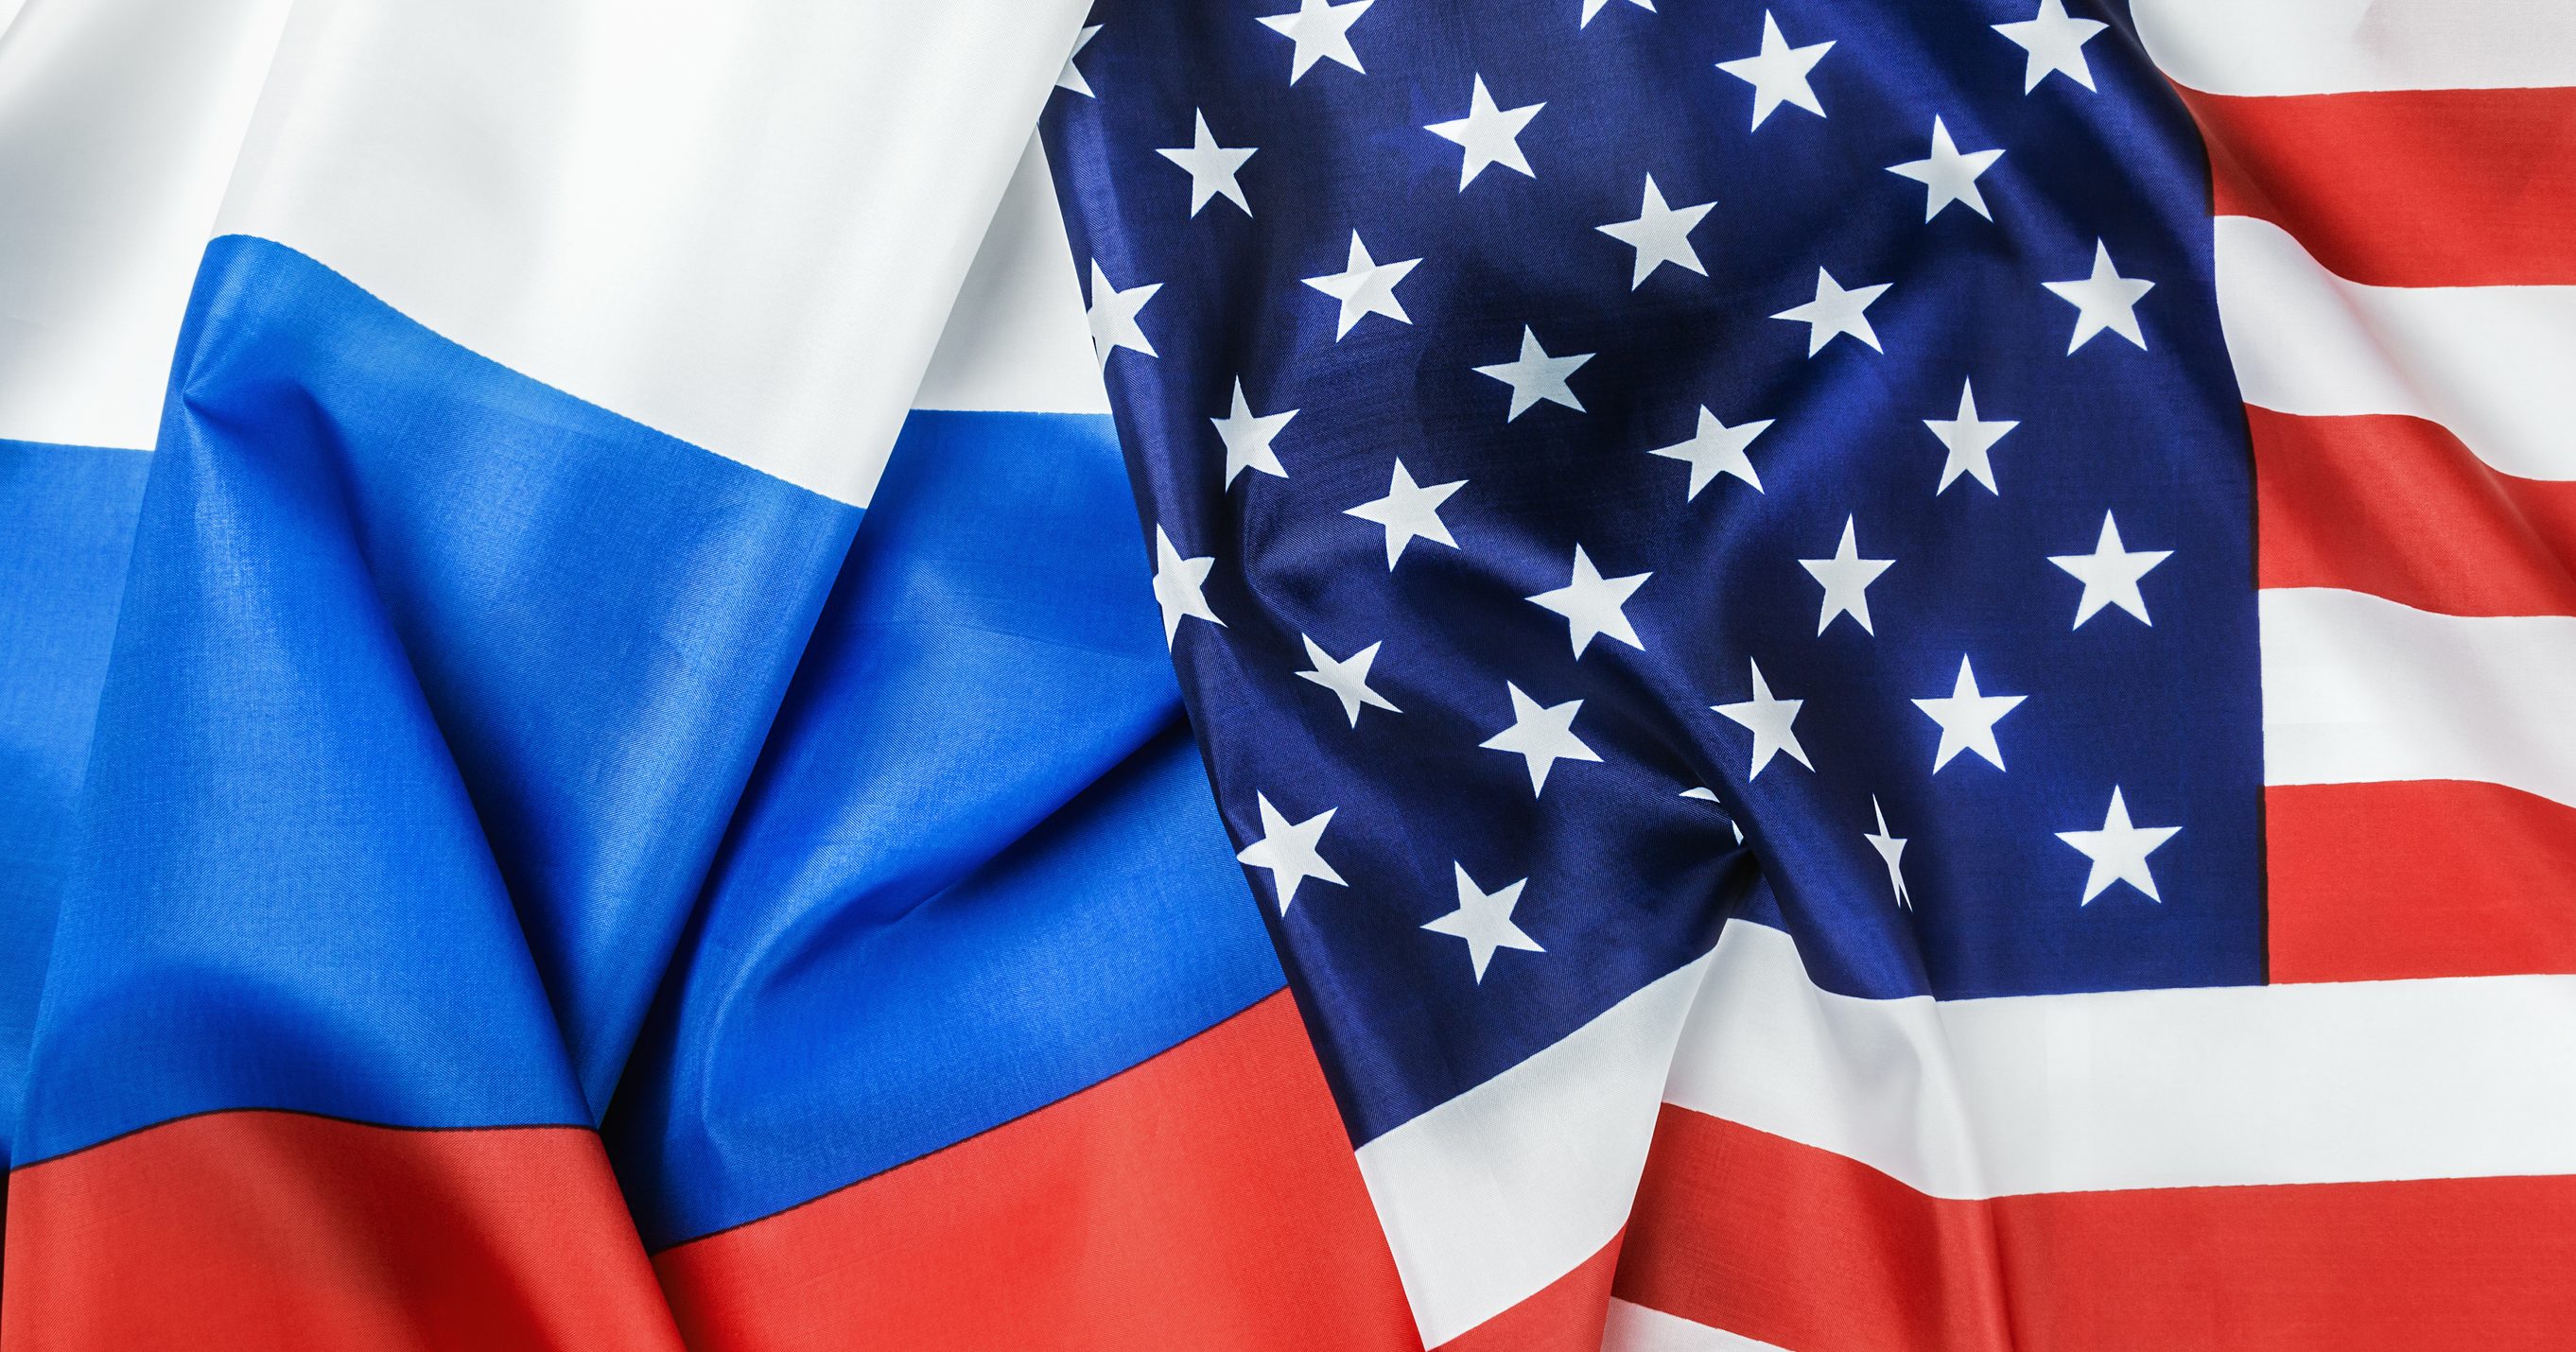 Americans in russia. США РФ флаг. Россия и США. Российский и американский флаги. Флаг России и США.